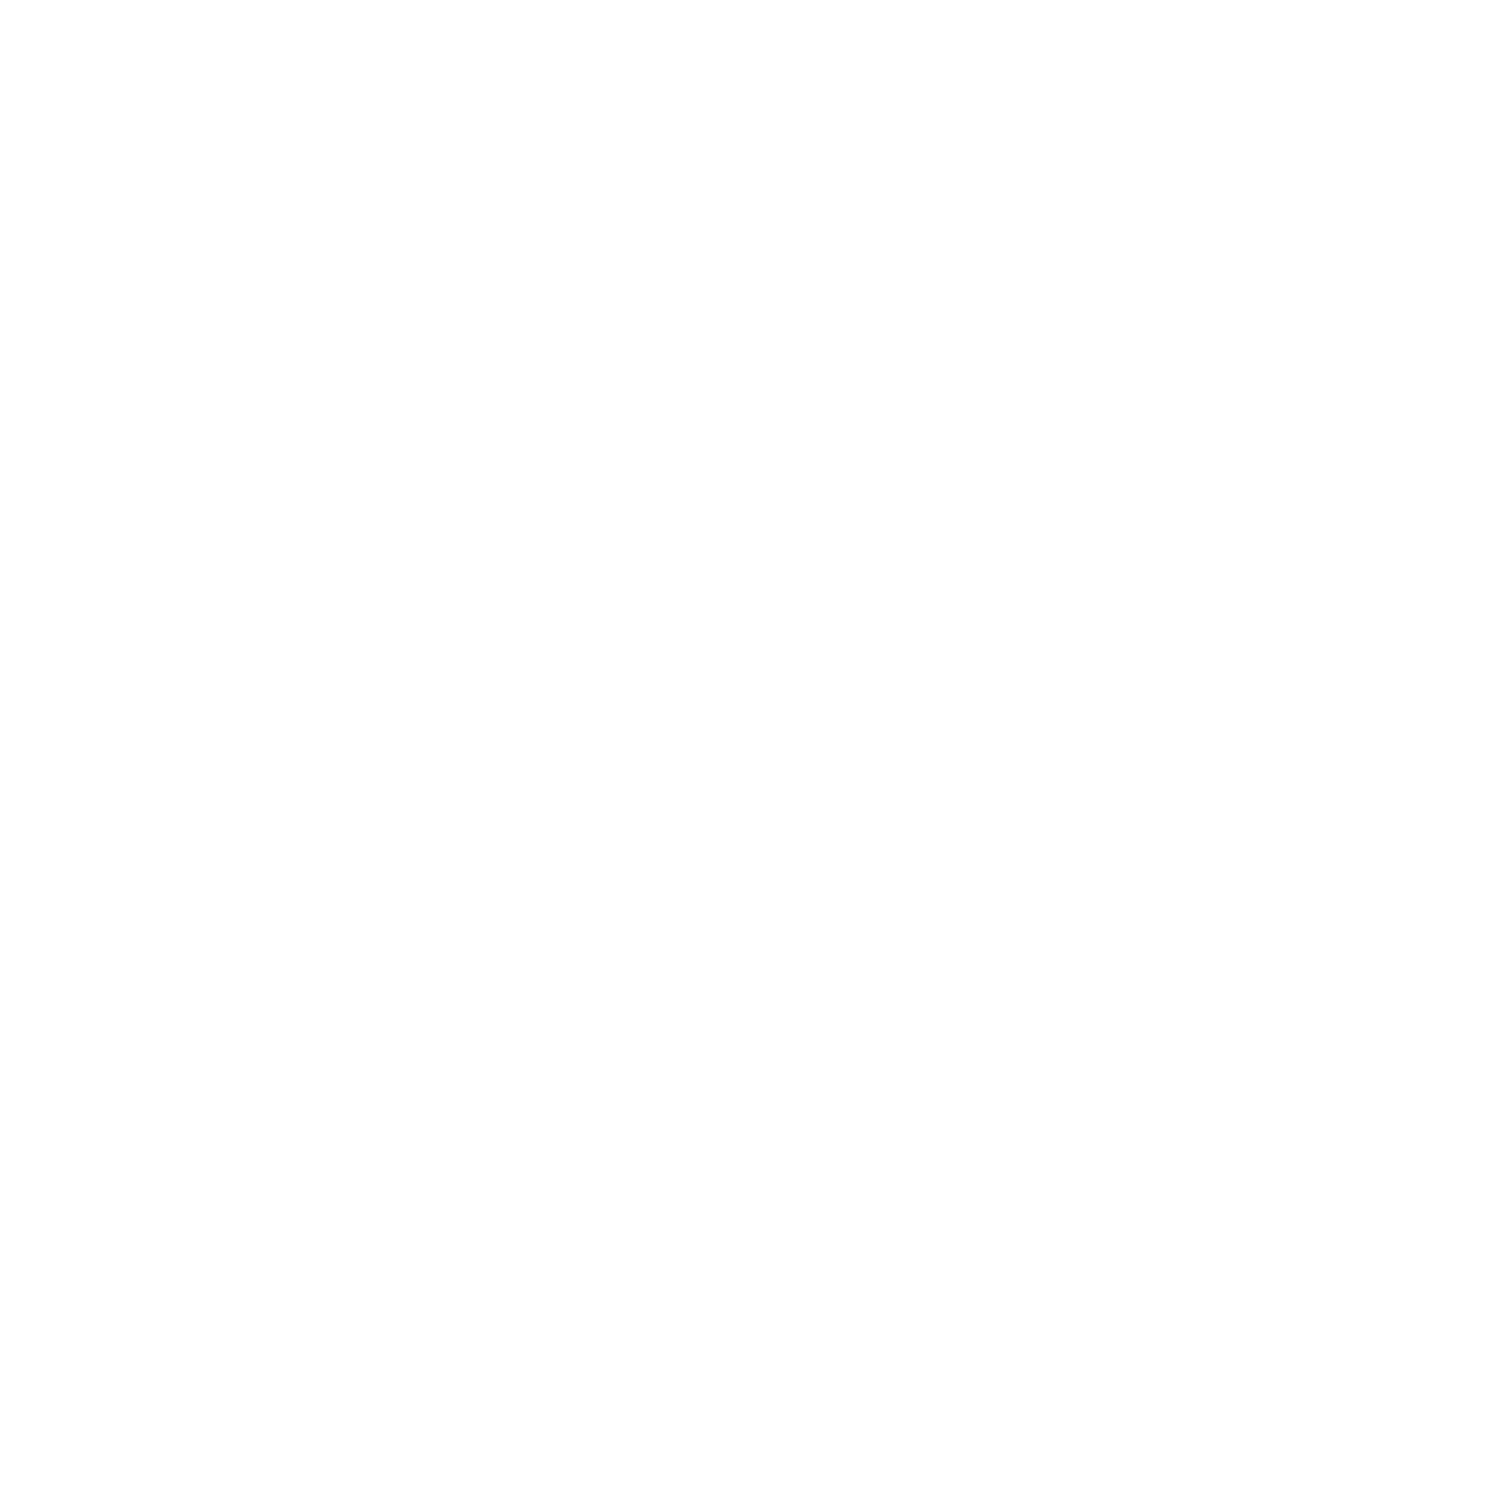 KIM DEVALL